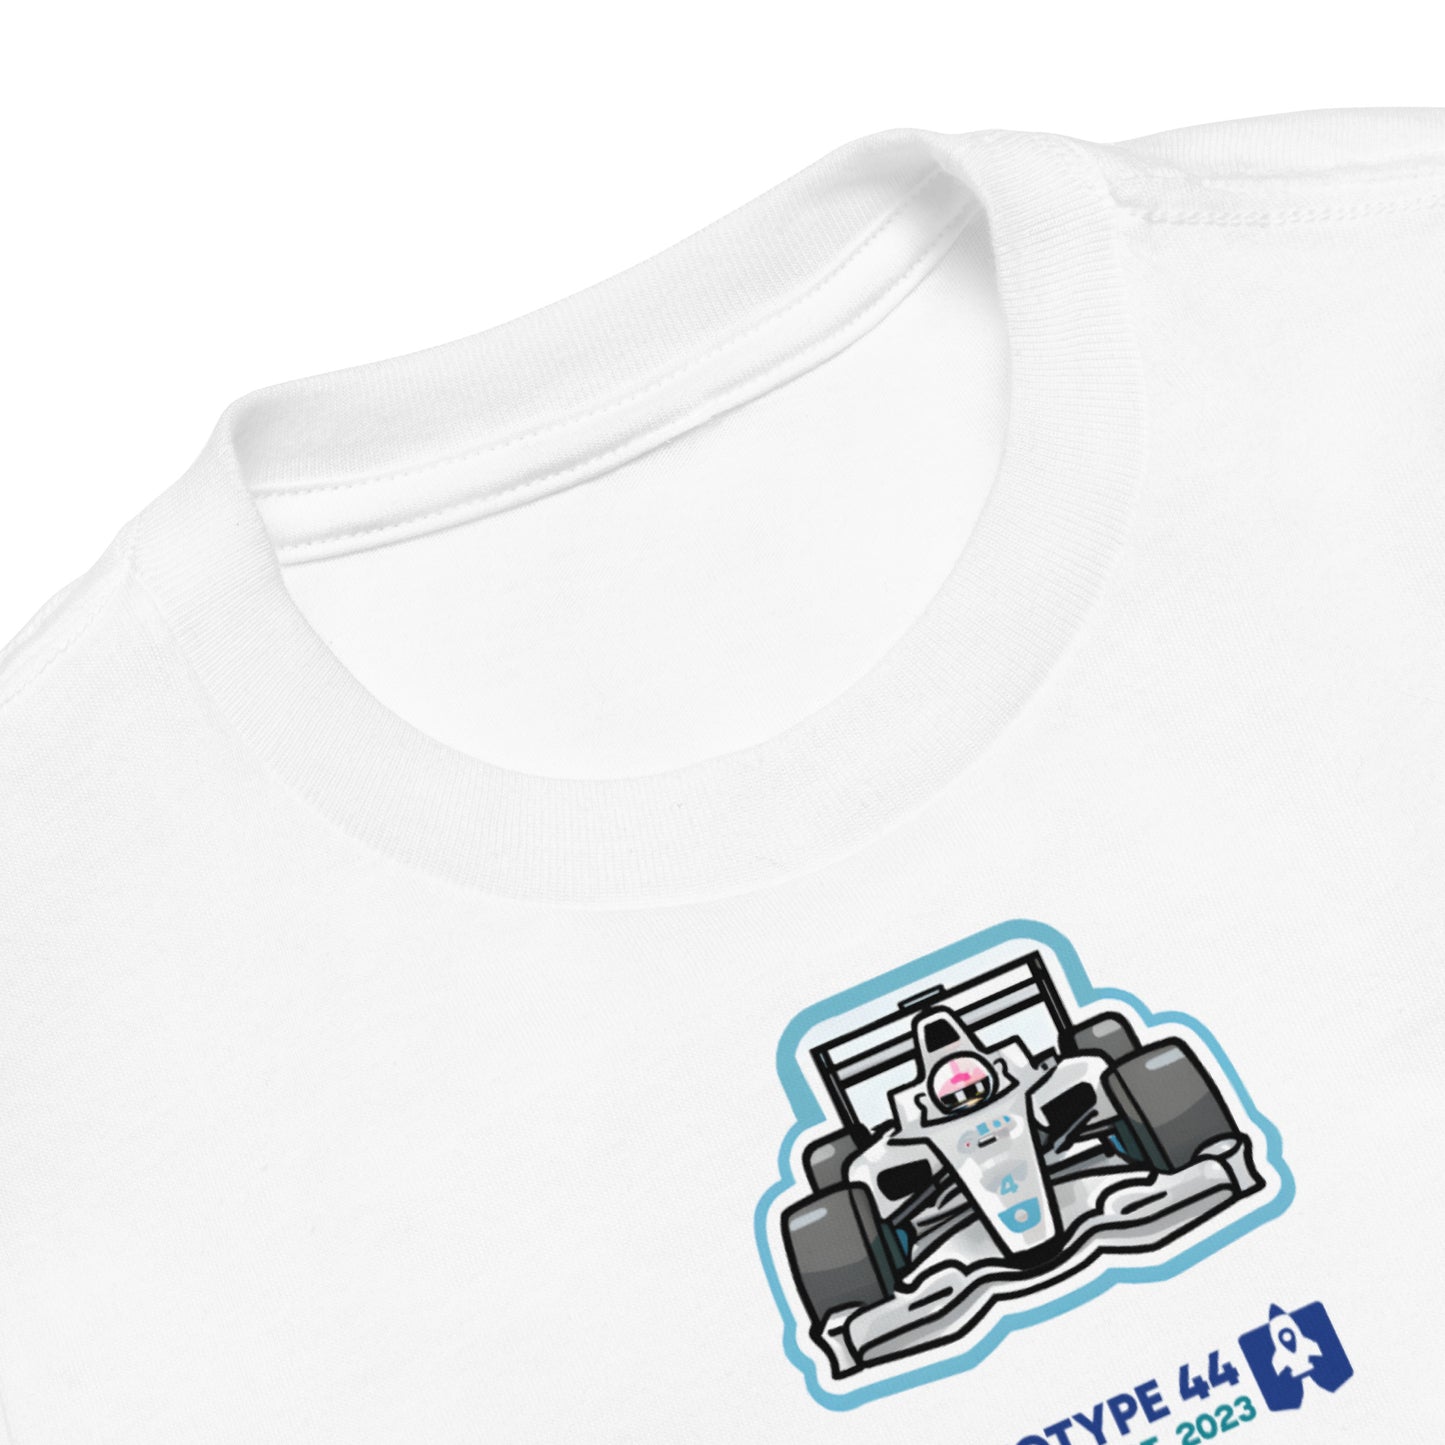 closeup view of formula one t-shirt that vaguely resemble Lewis Hamilton AMG Petronas race car